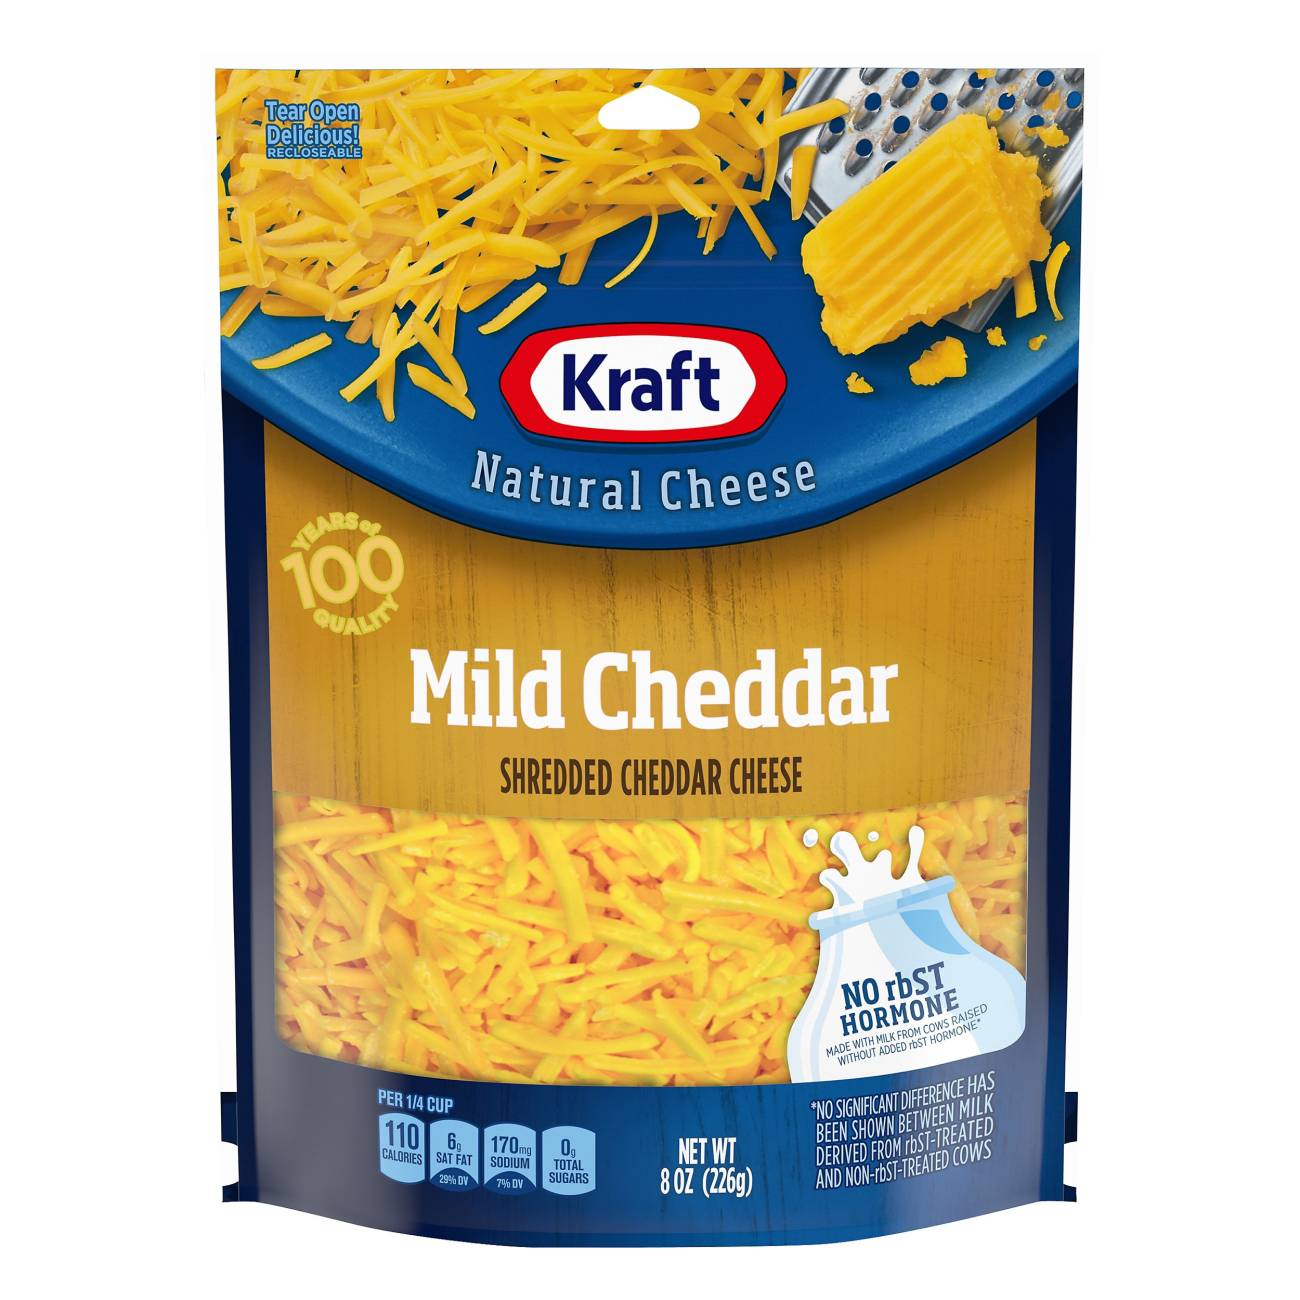 Kraft Mild Cheddar Shredded Cheese; image 1 of 4